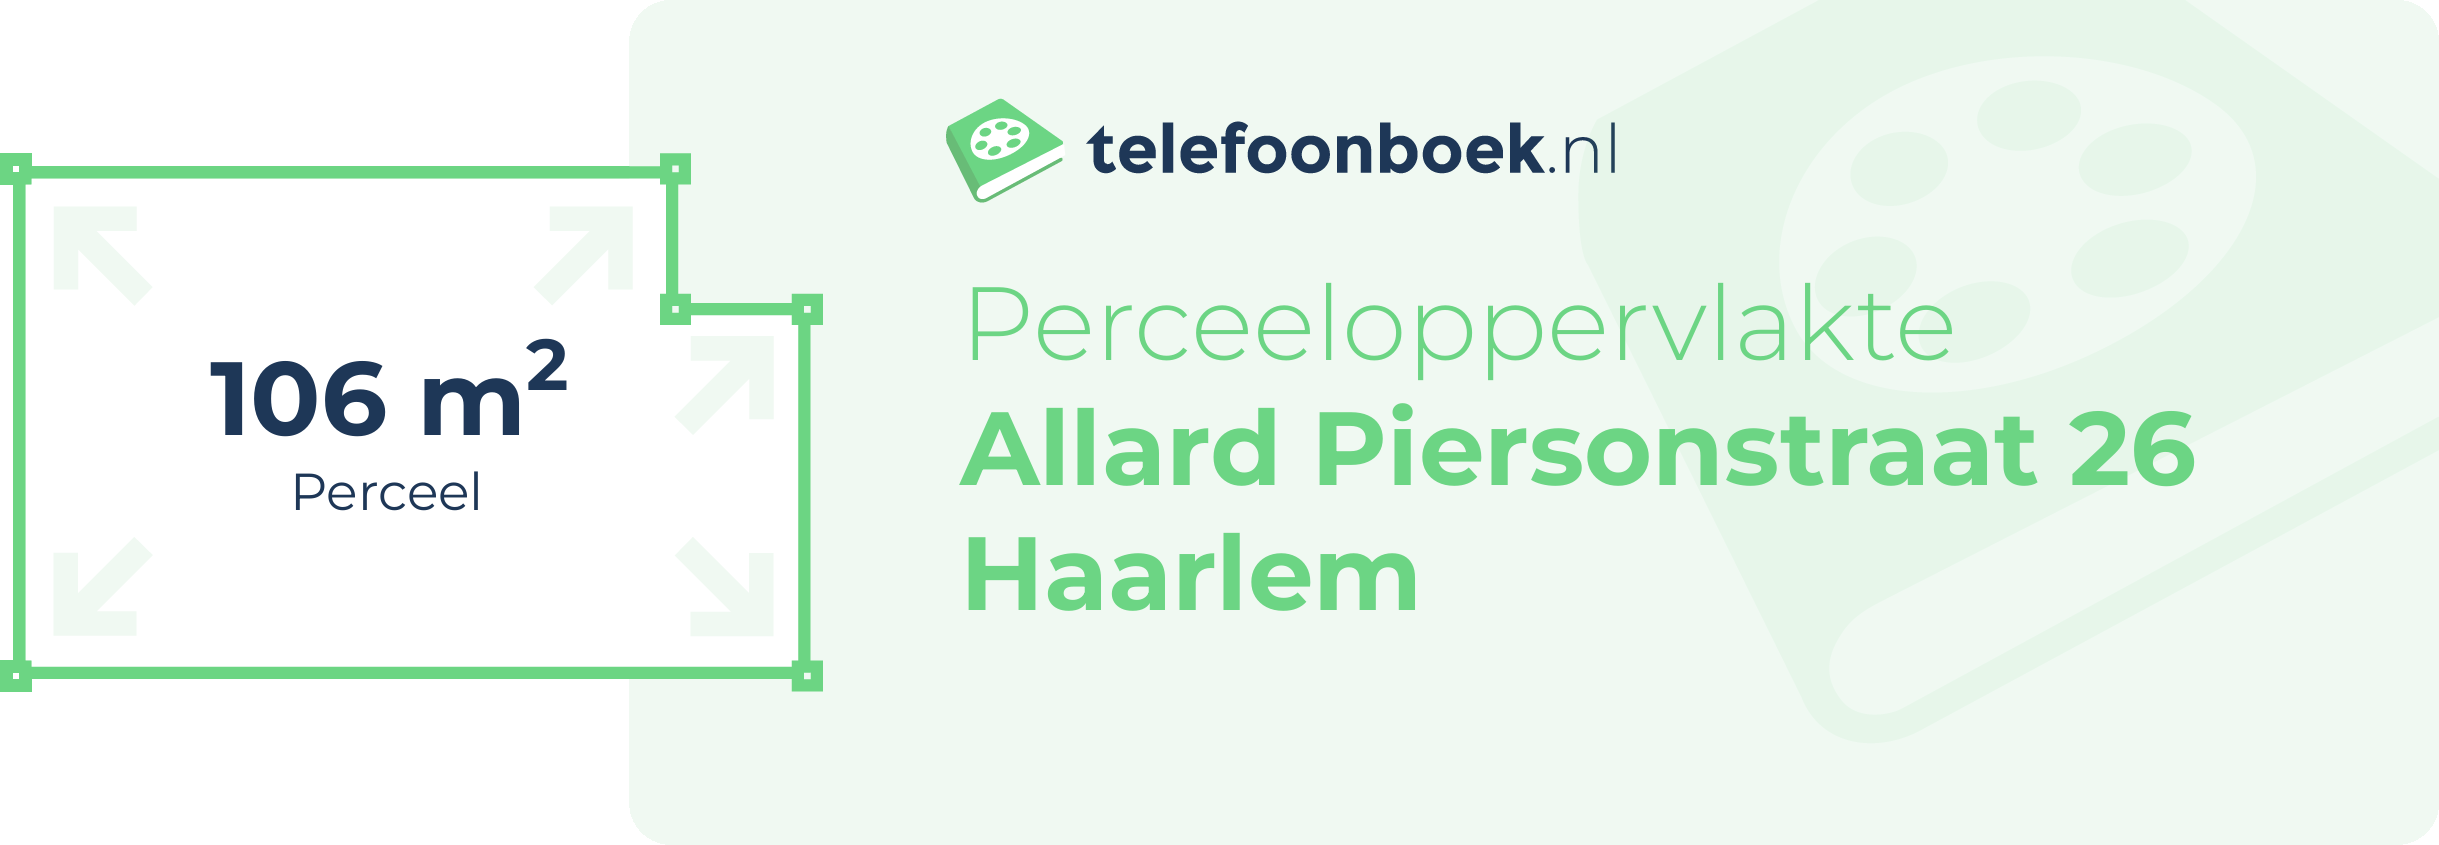 Perceeloppervlakte Allard Piersonstraat 26 Haarlem